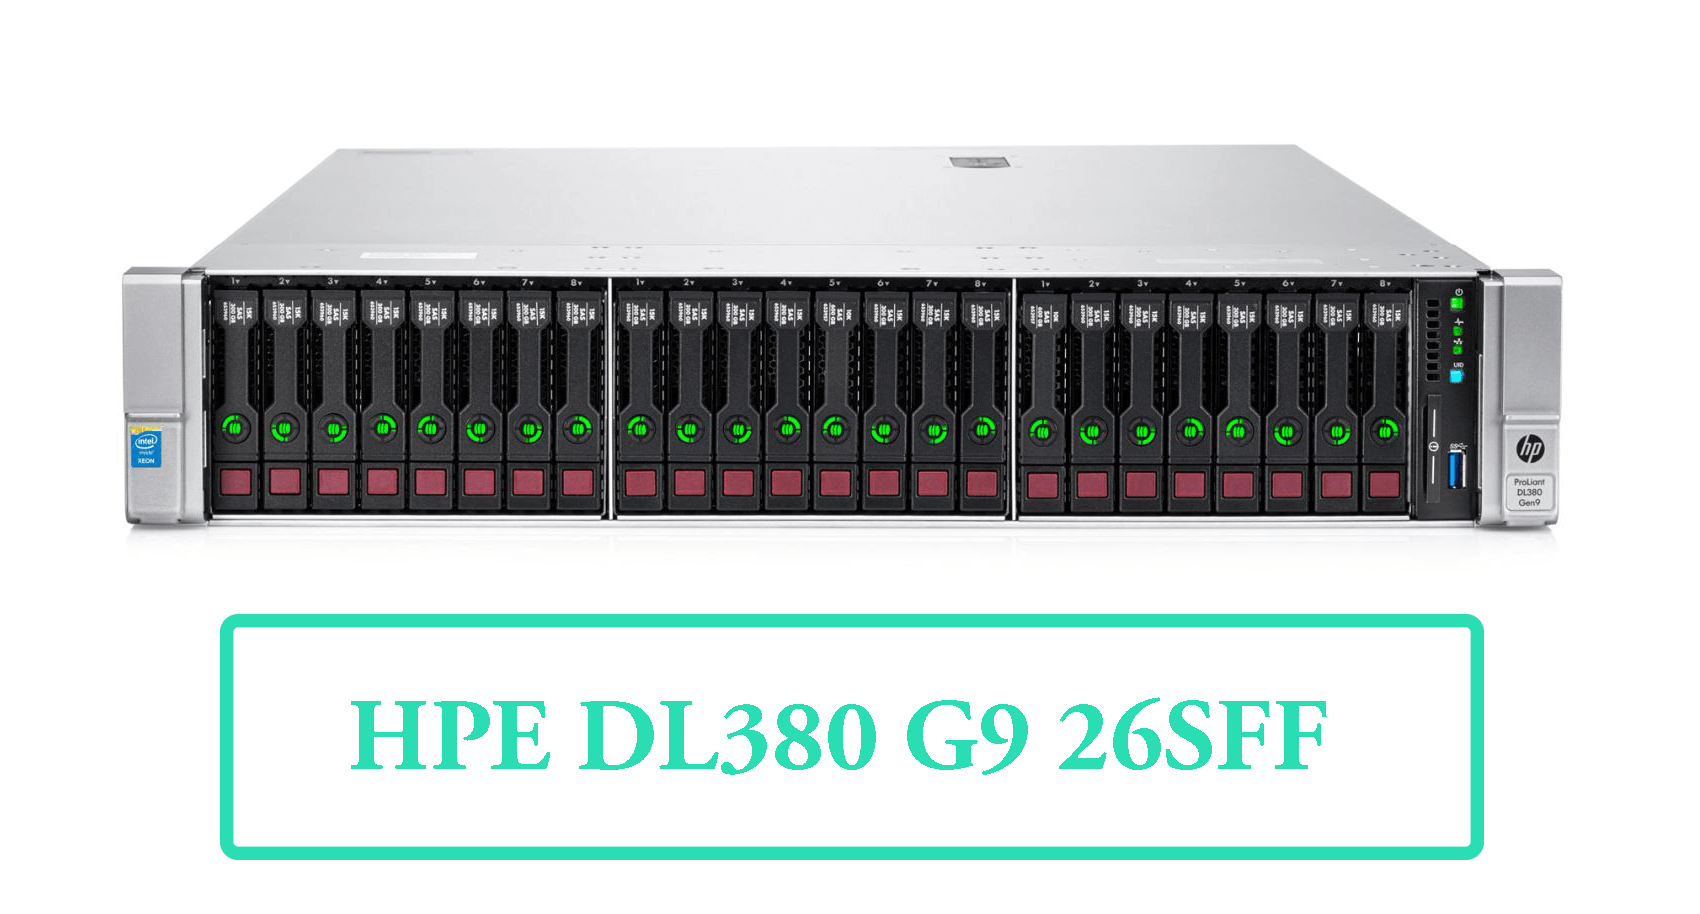 سرور HP DL380 G9 26sff